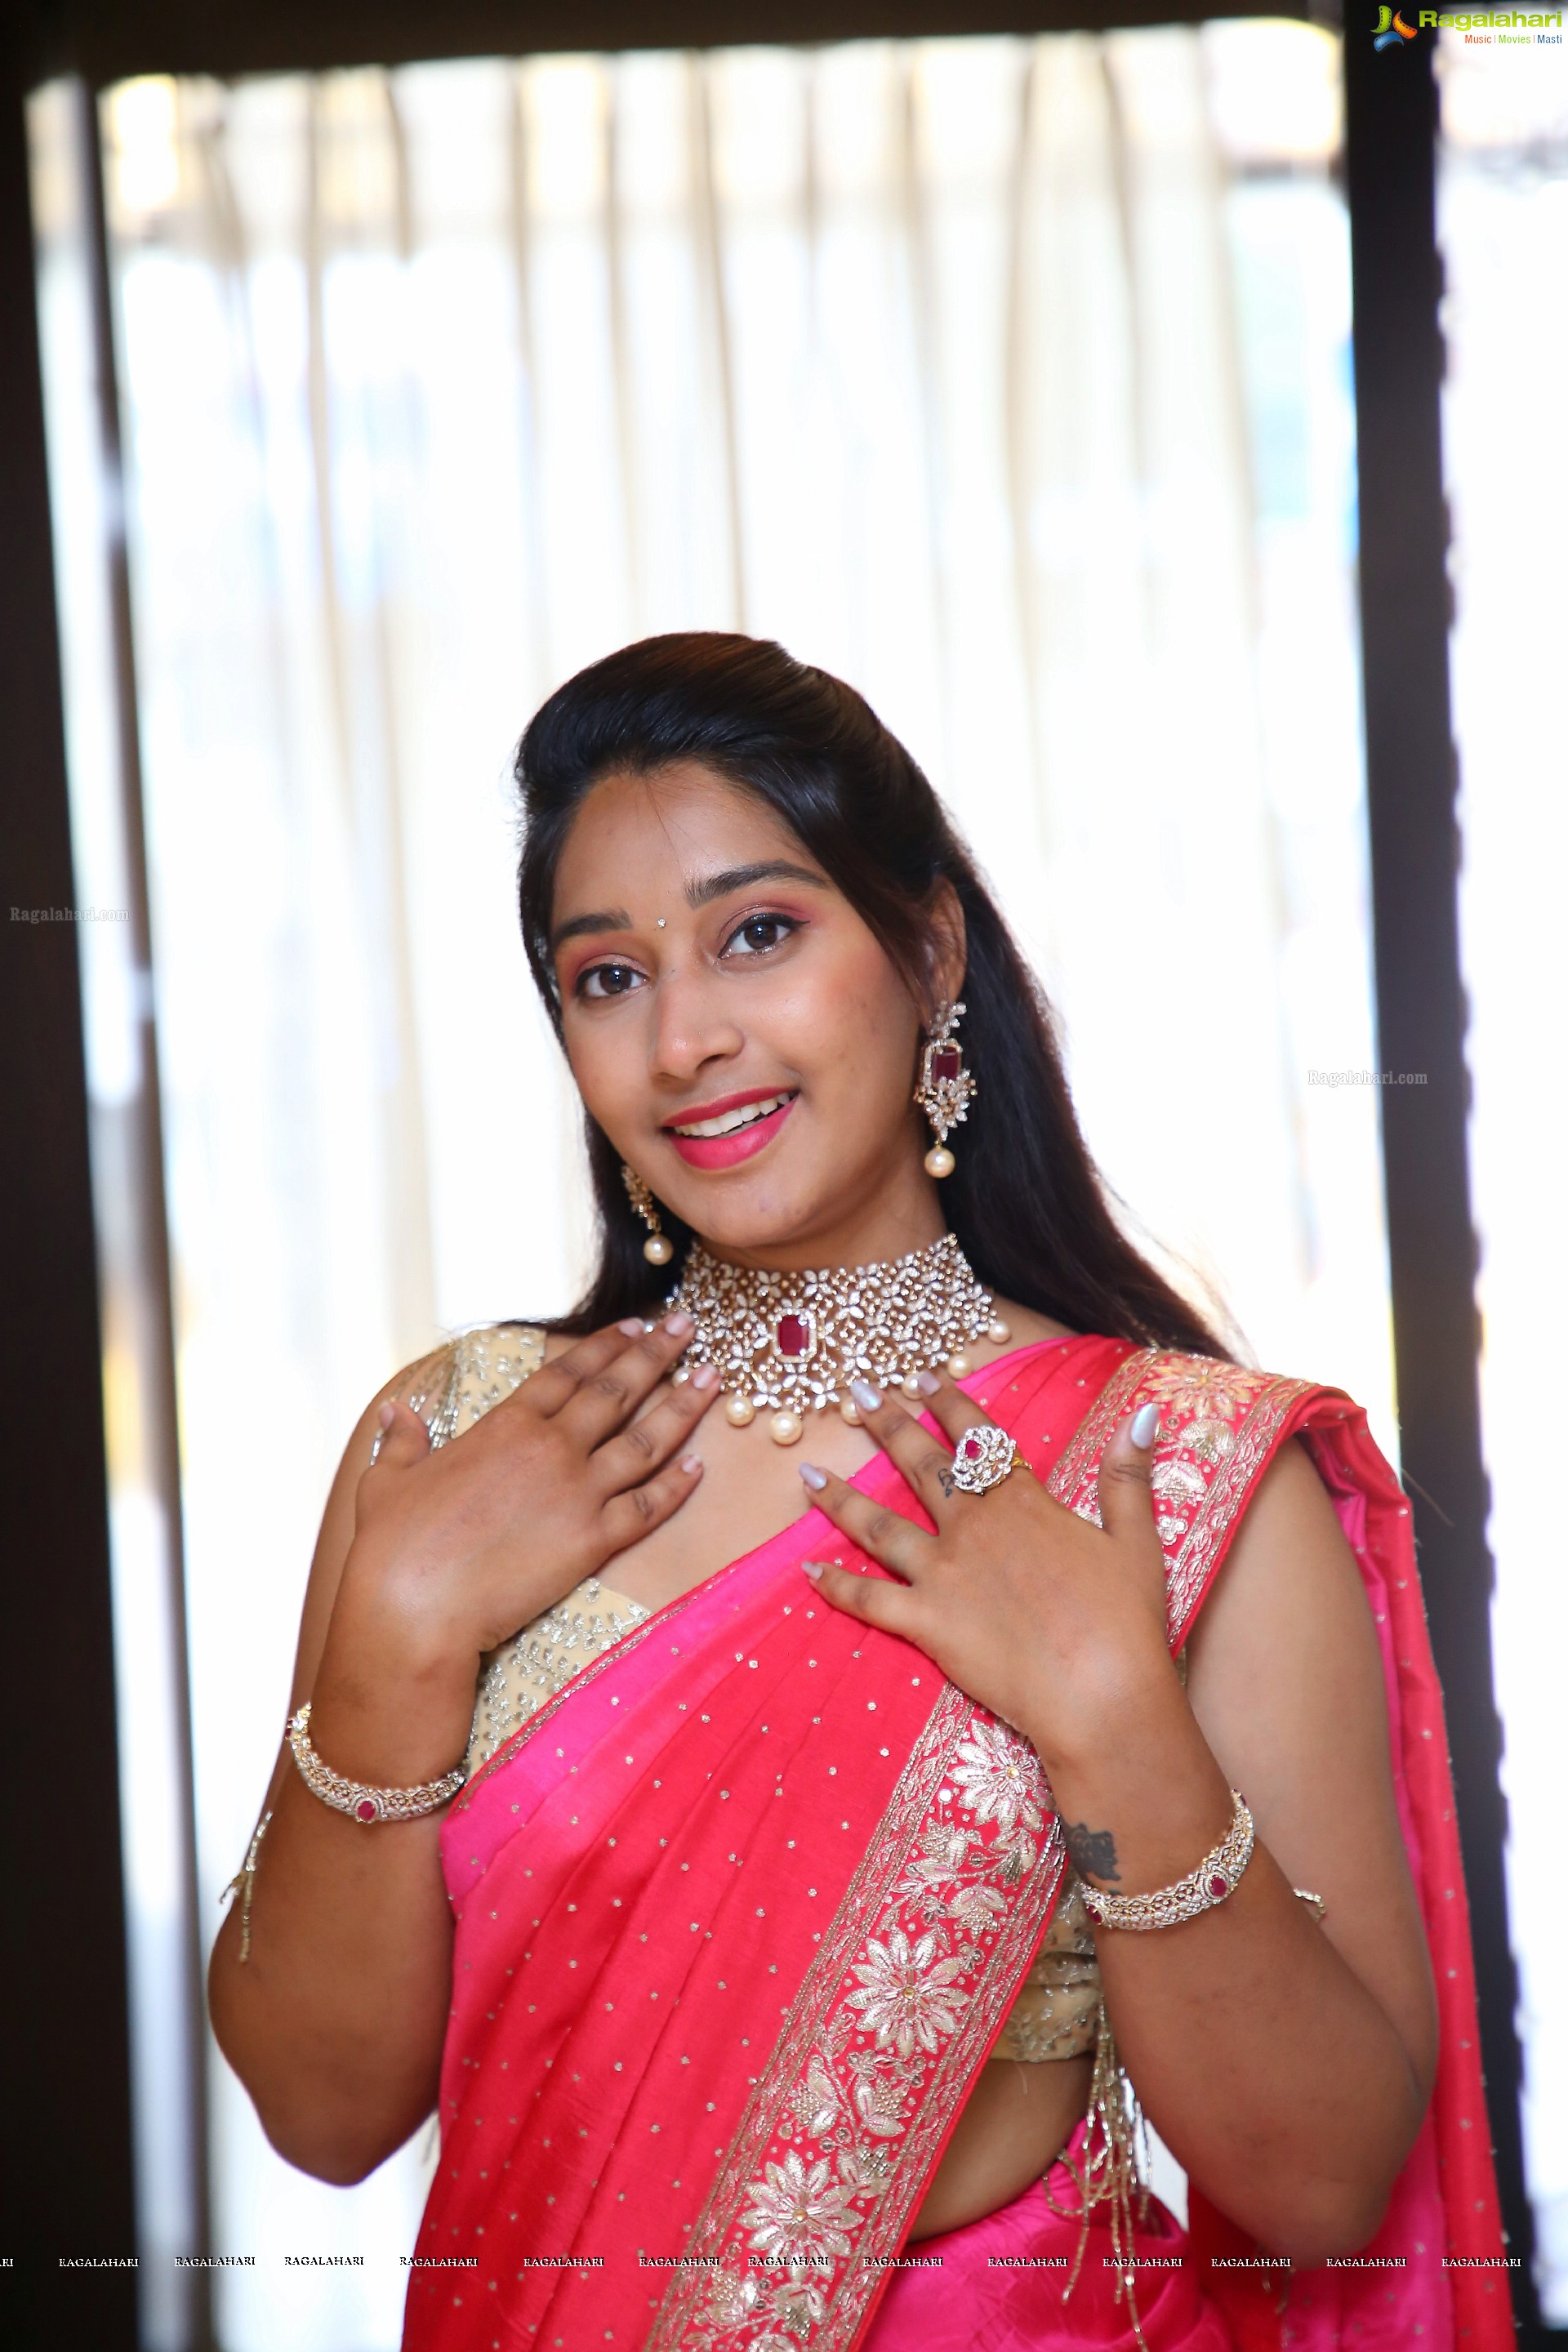 Chandini Gollapudi Poses With Jewellery, HD Photo Gallery